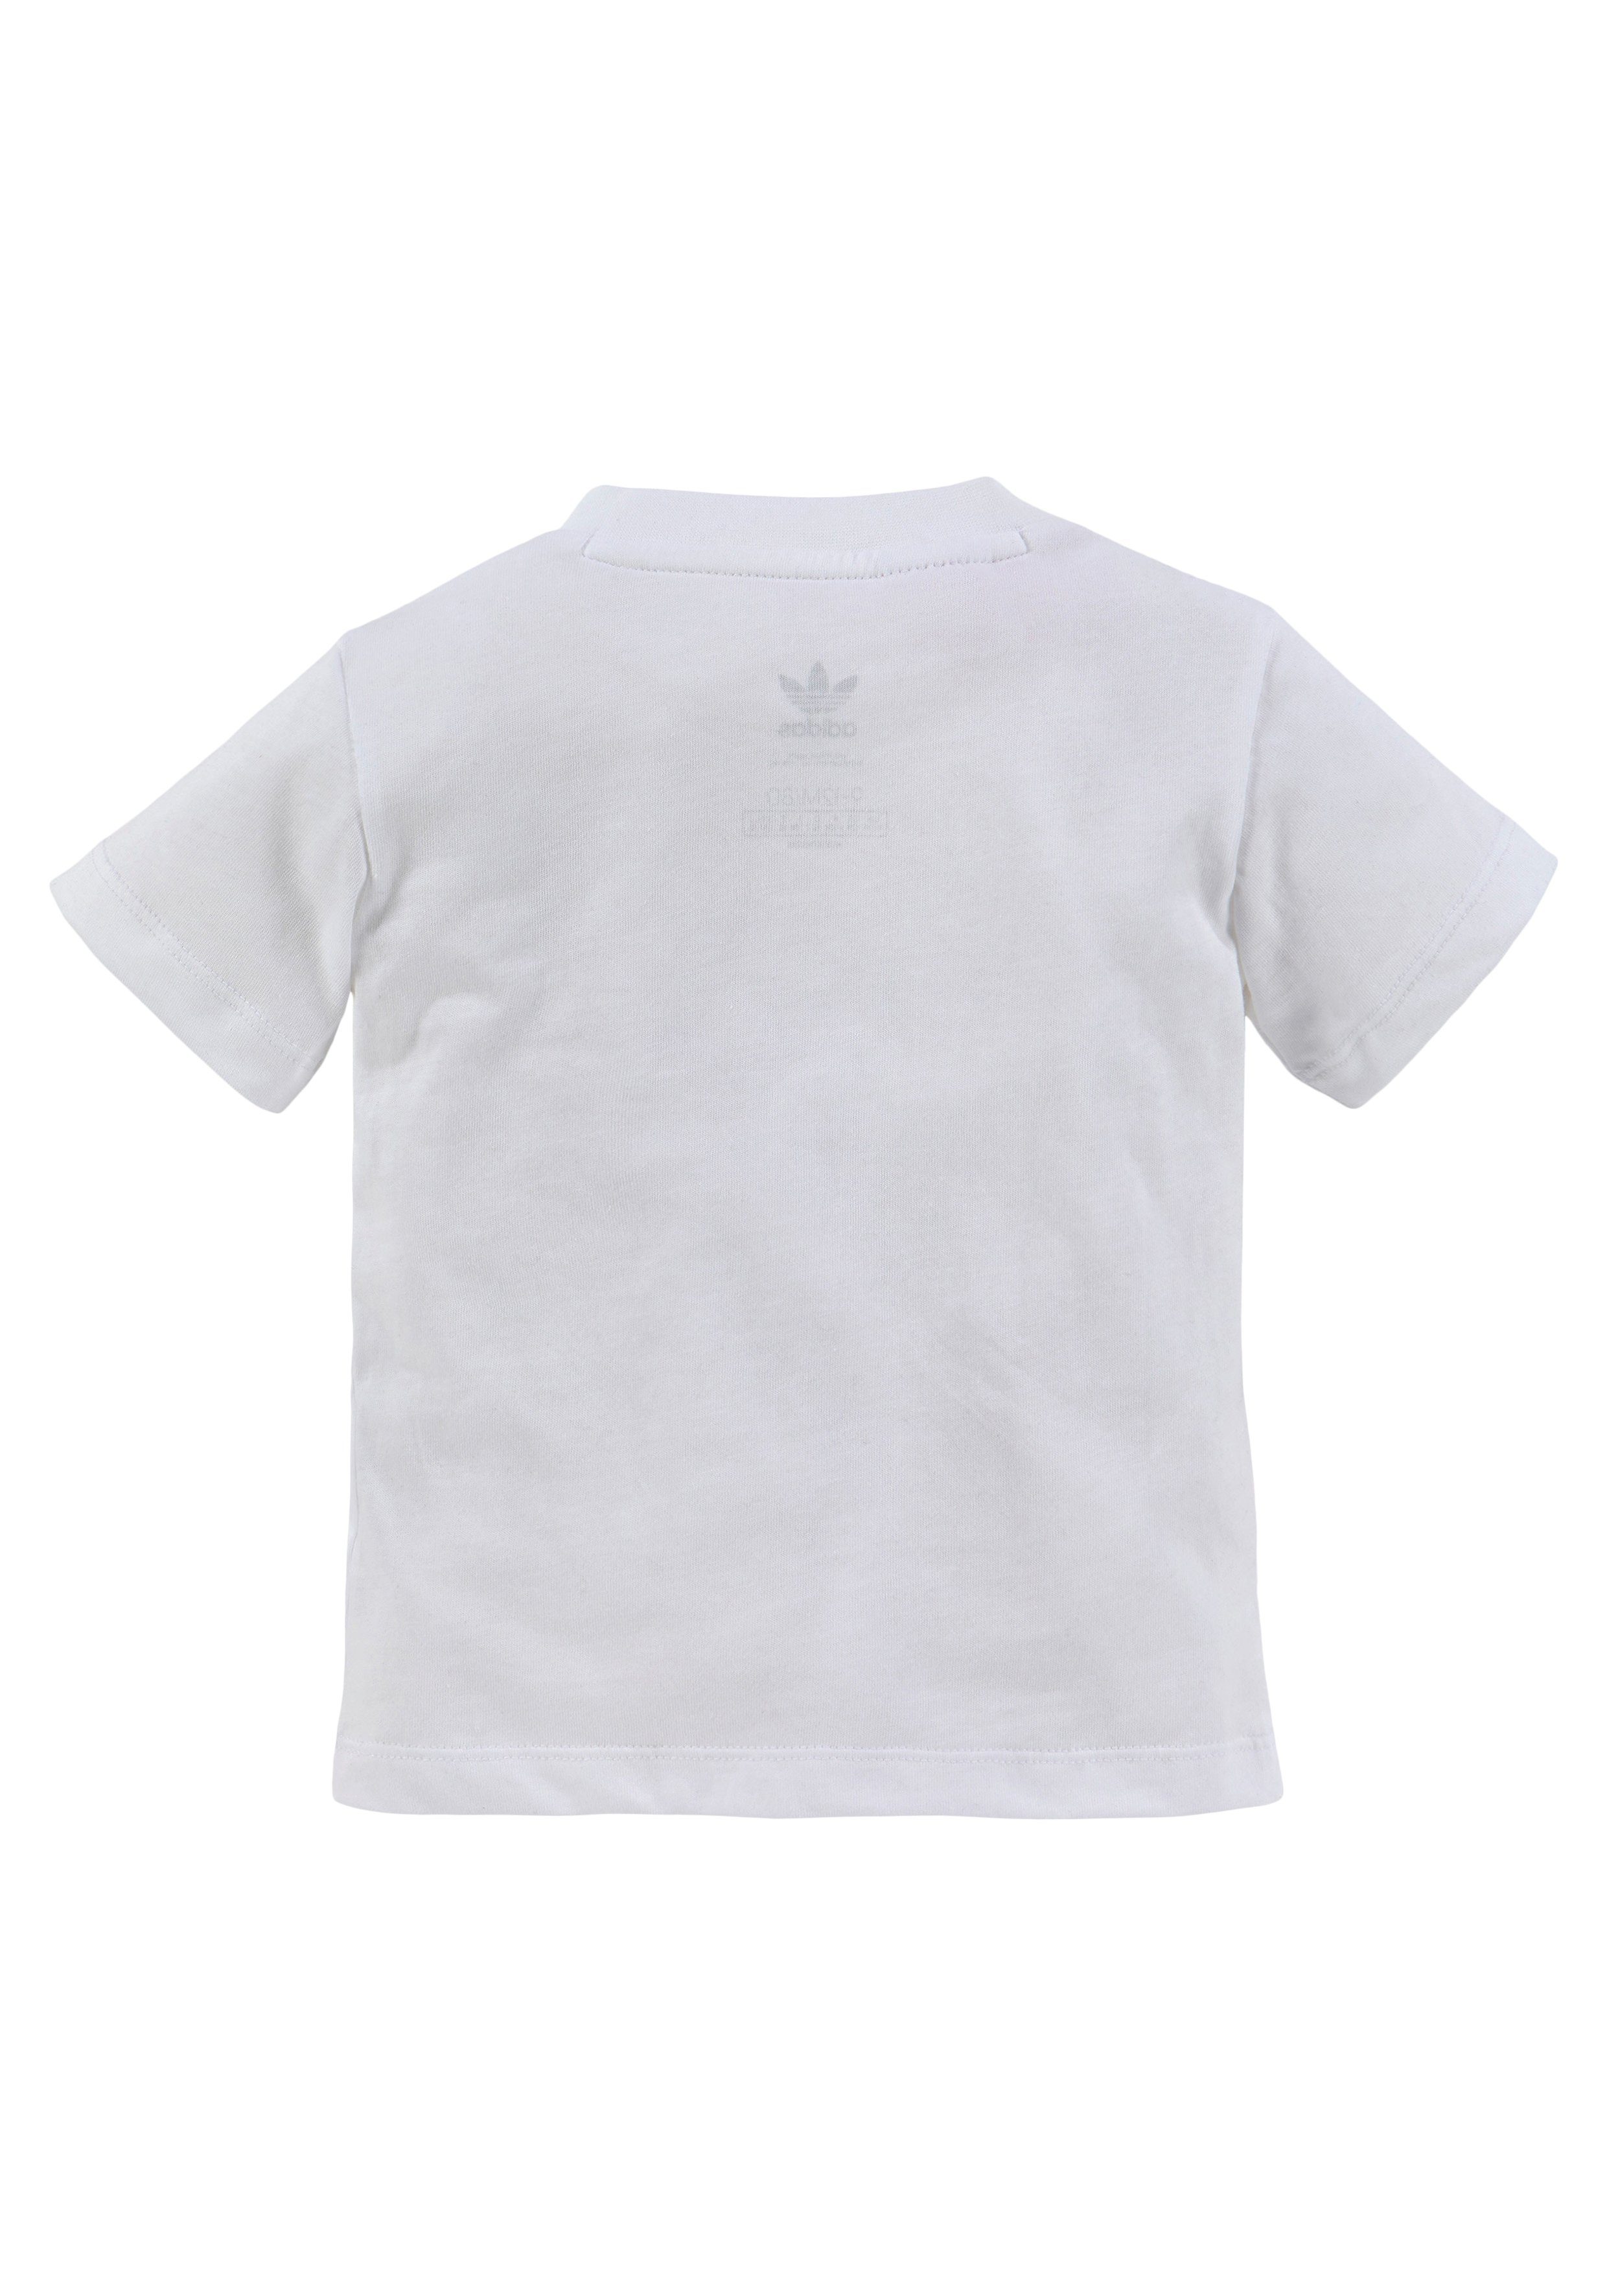 TREFOIL UND T-Shirt (Set) Shorts Bliss adidas White / SET SHORTS Originals & Pink